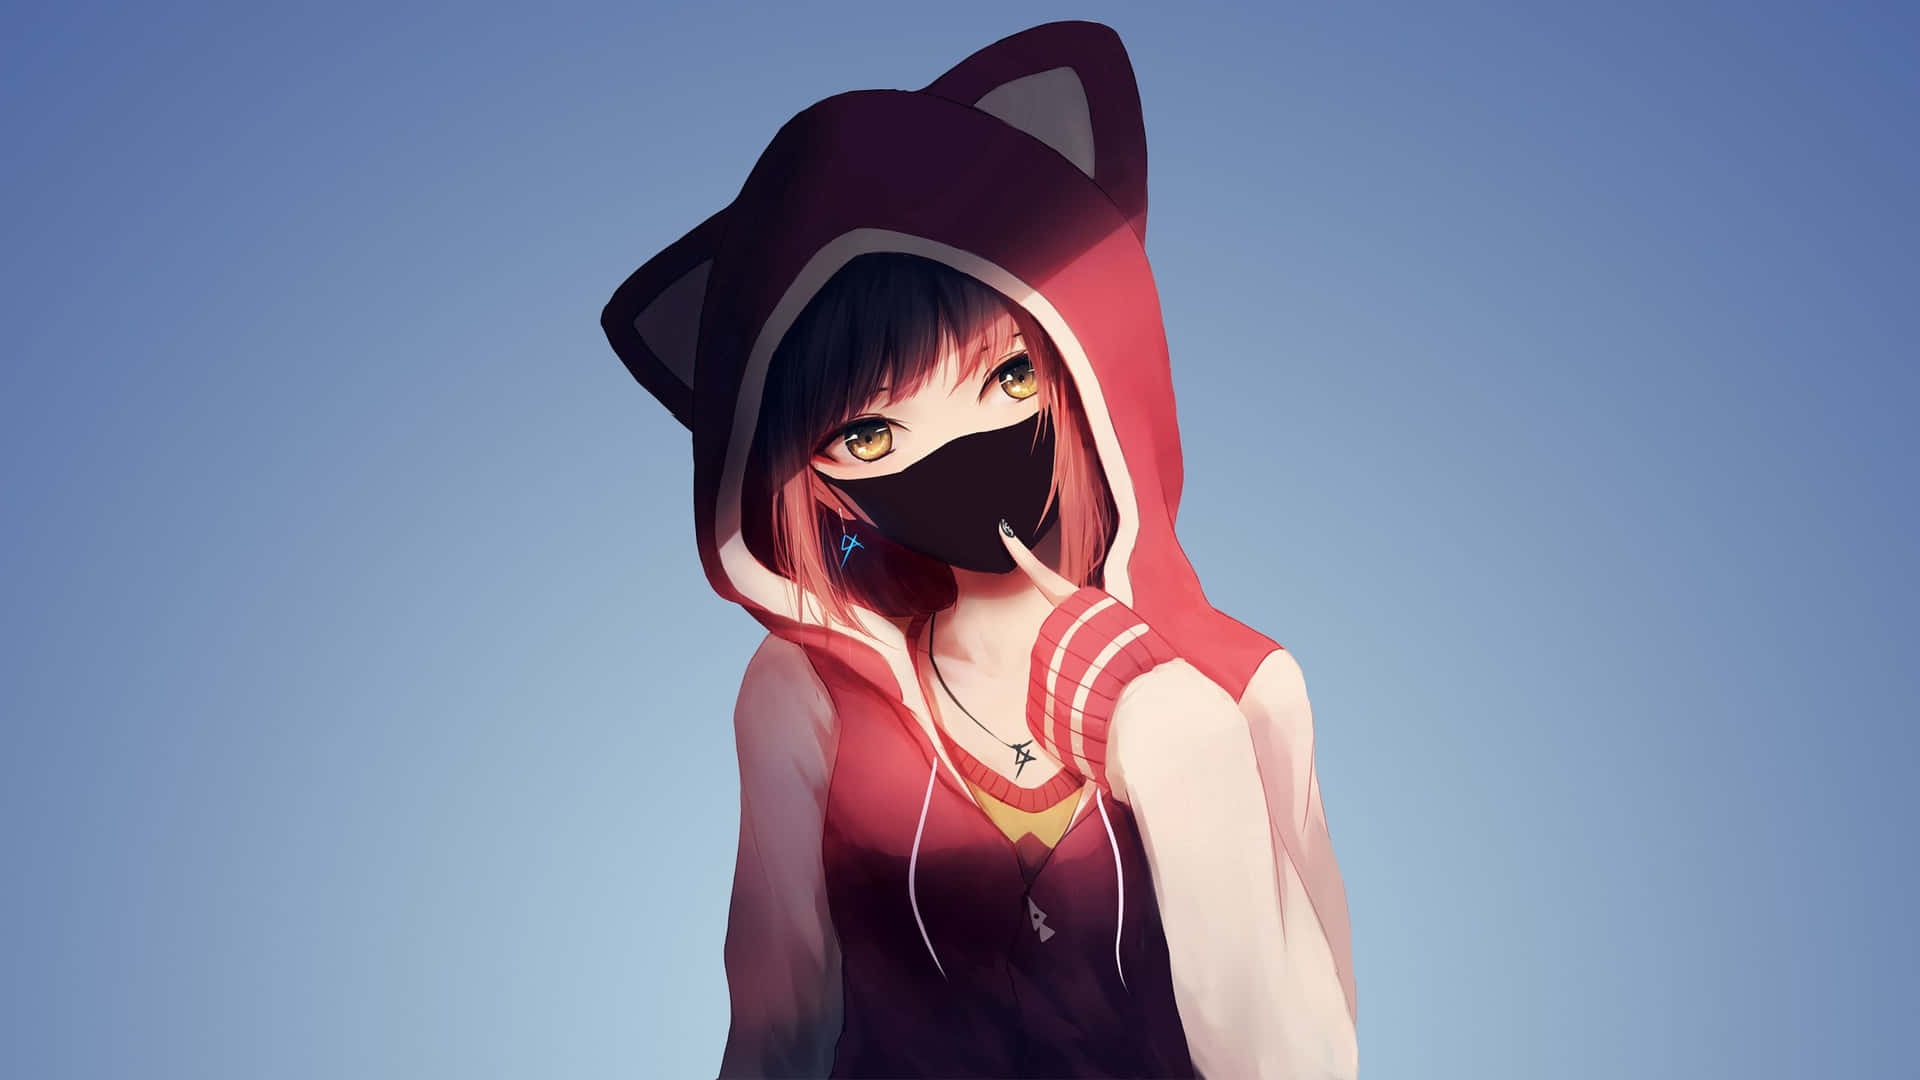 Sweet Anime Girl Profile Wearing Hooded Jacket Wallpaper